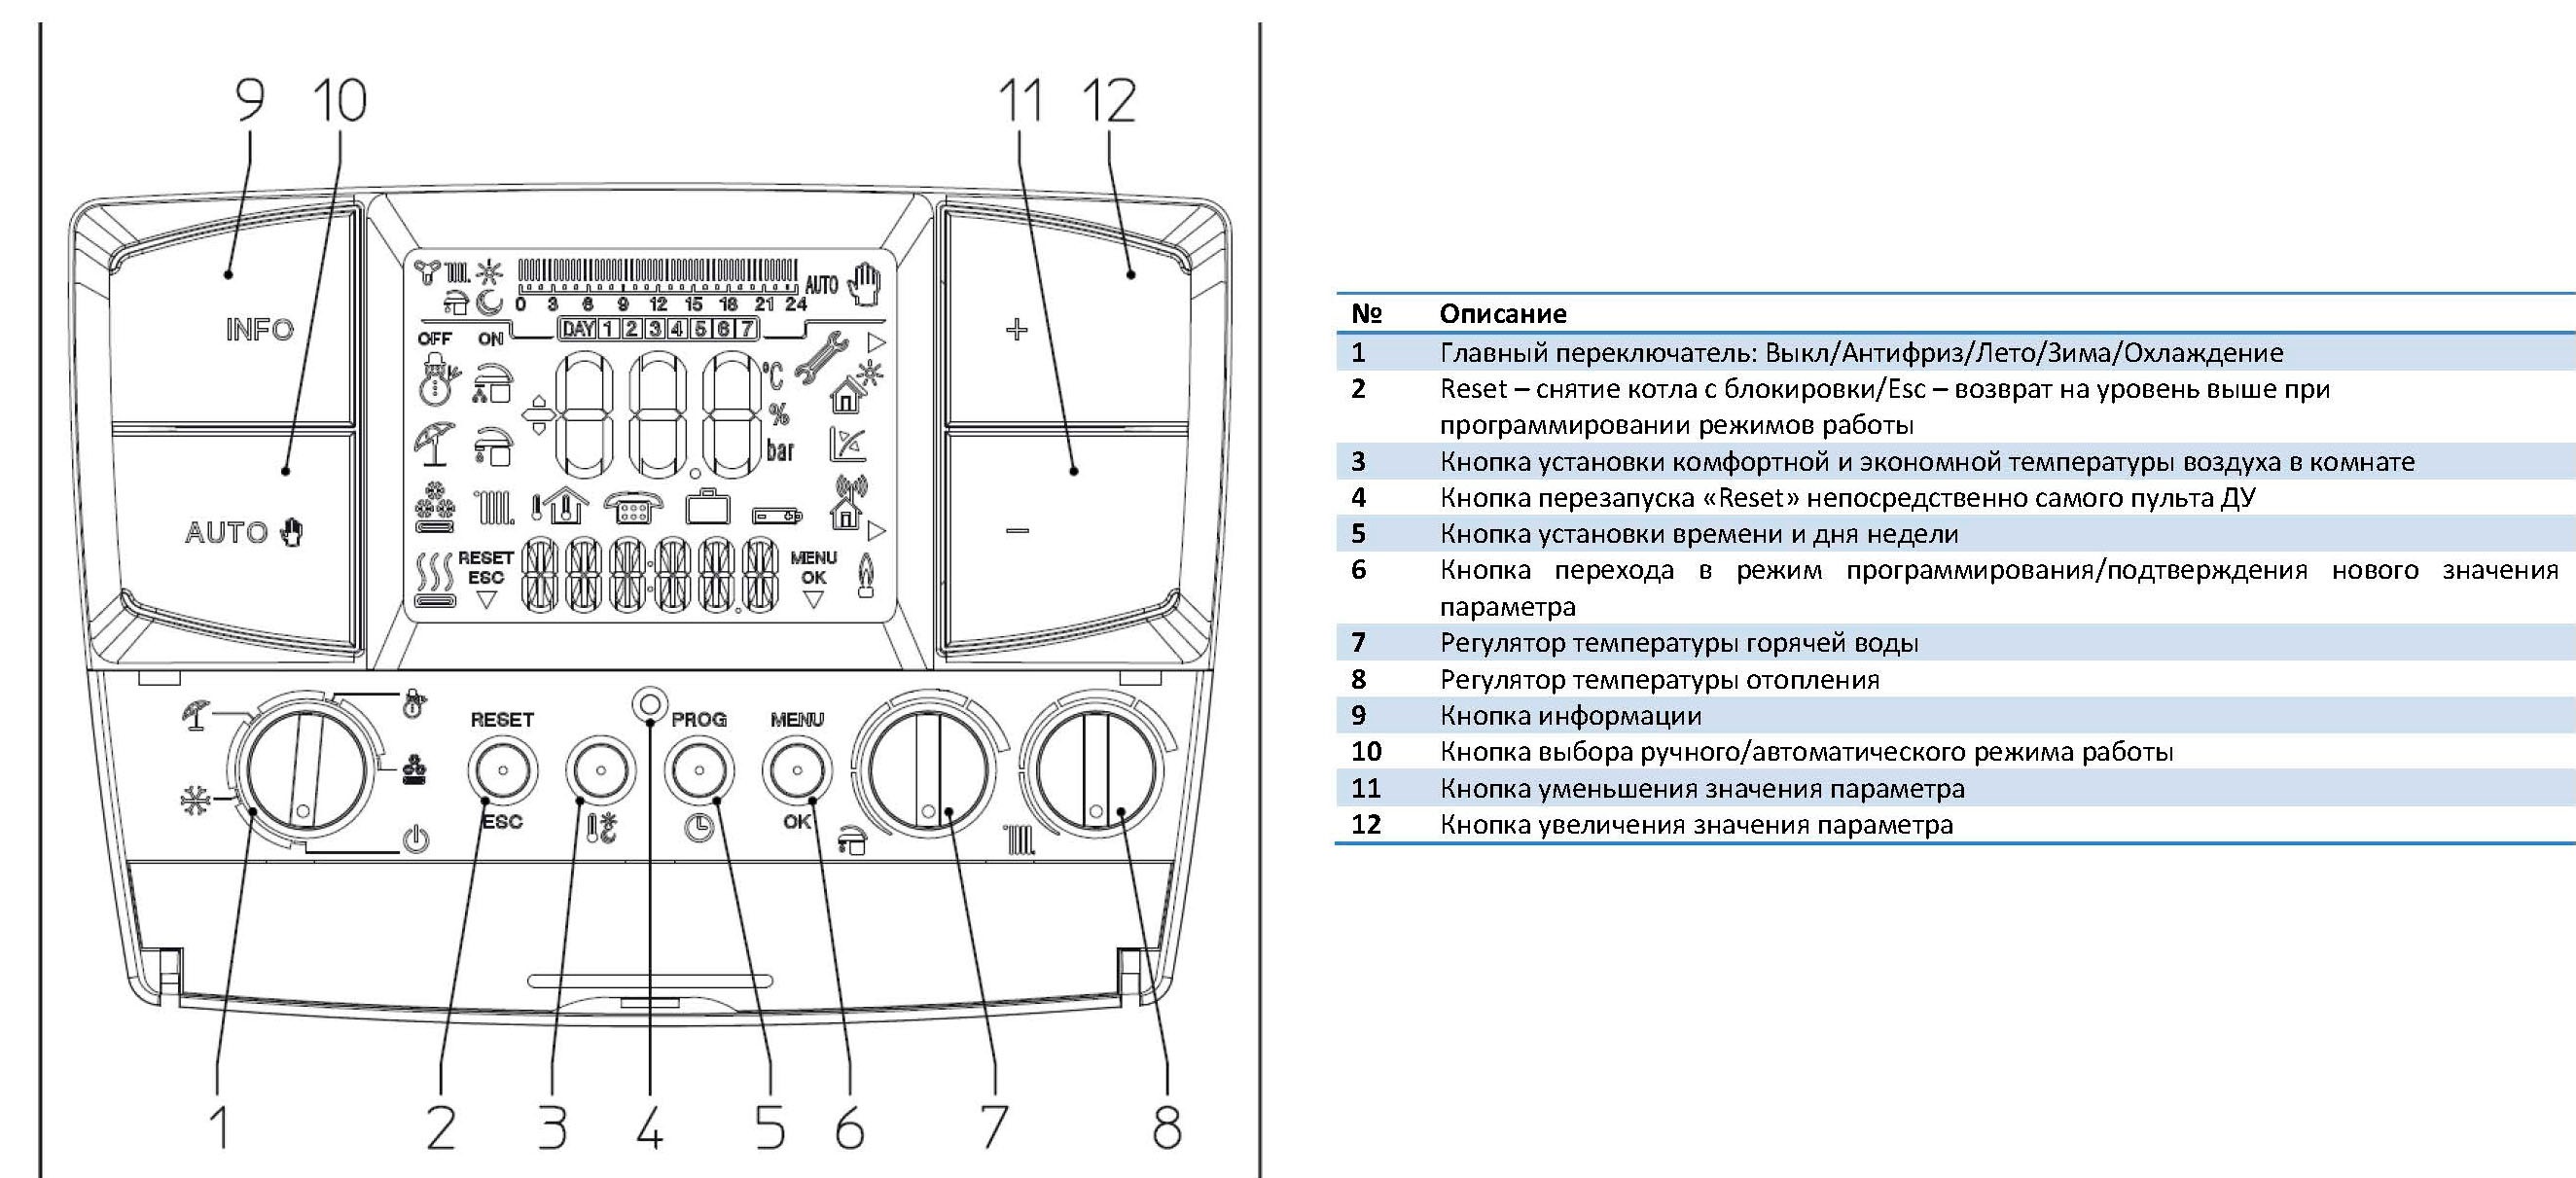 Терморегулятор Immergas CAR V2 (3.021395)  цена 8700.00 грн - фотография 2